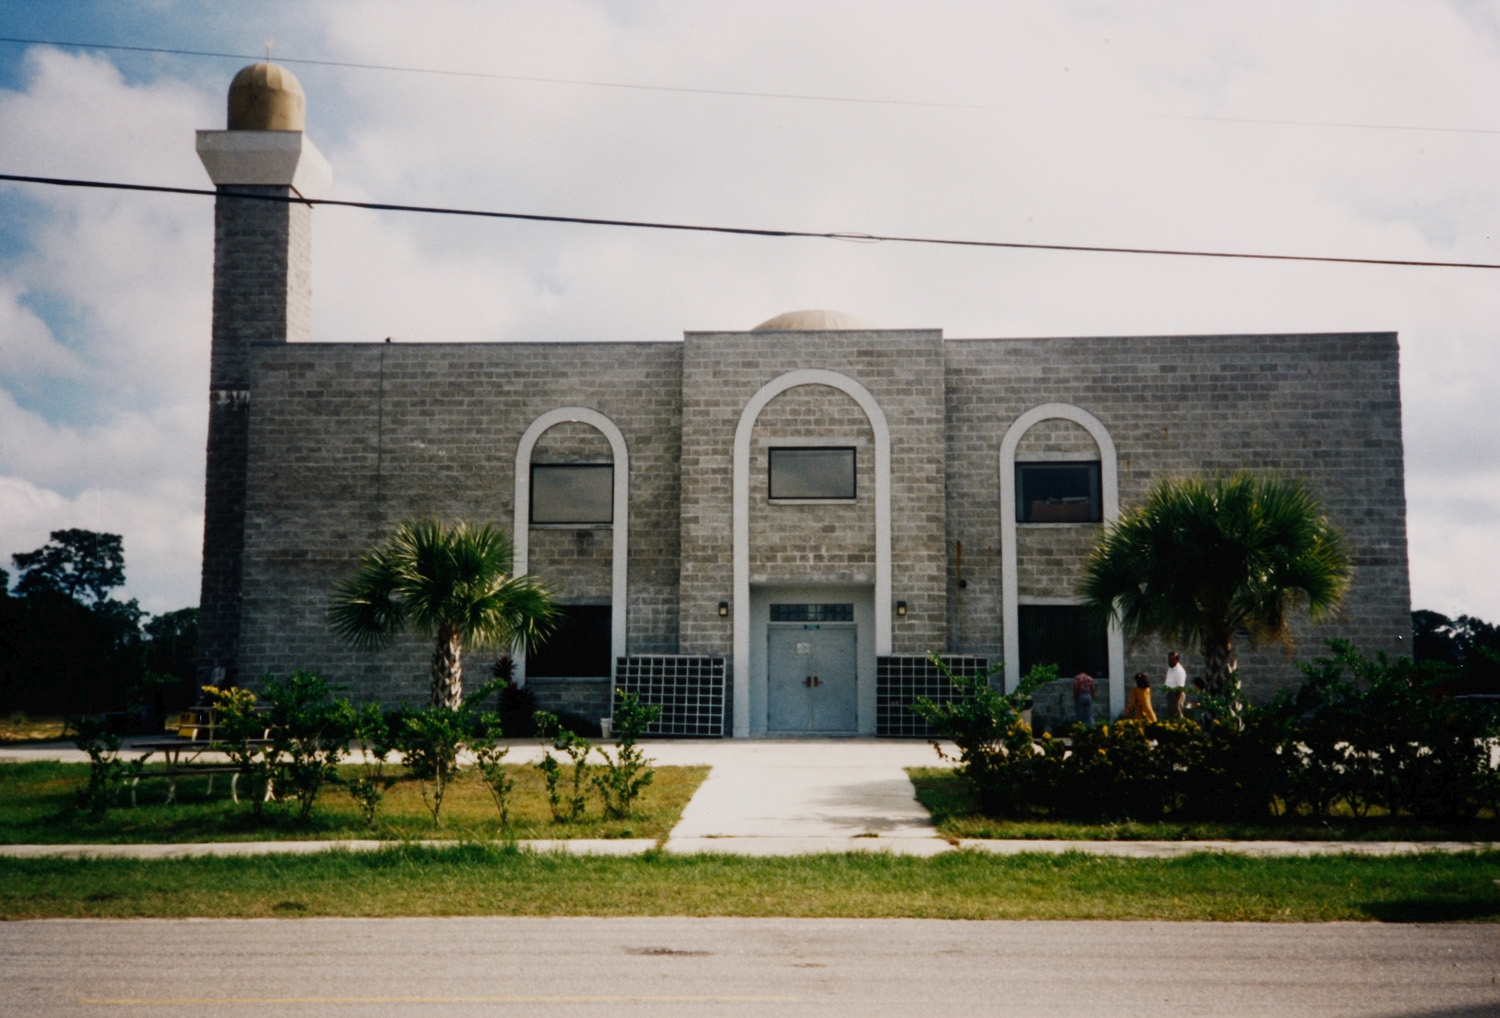 Islamic Center of Orlando